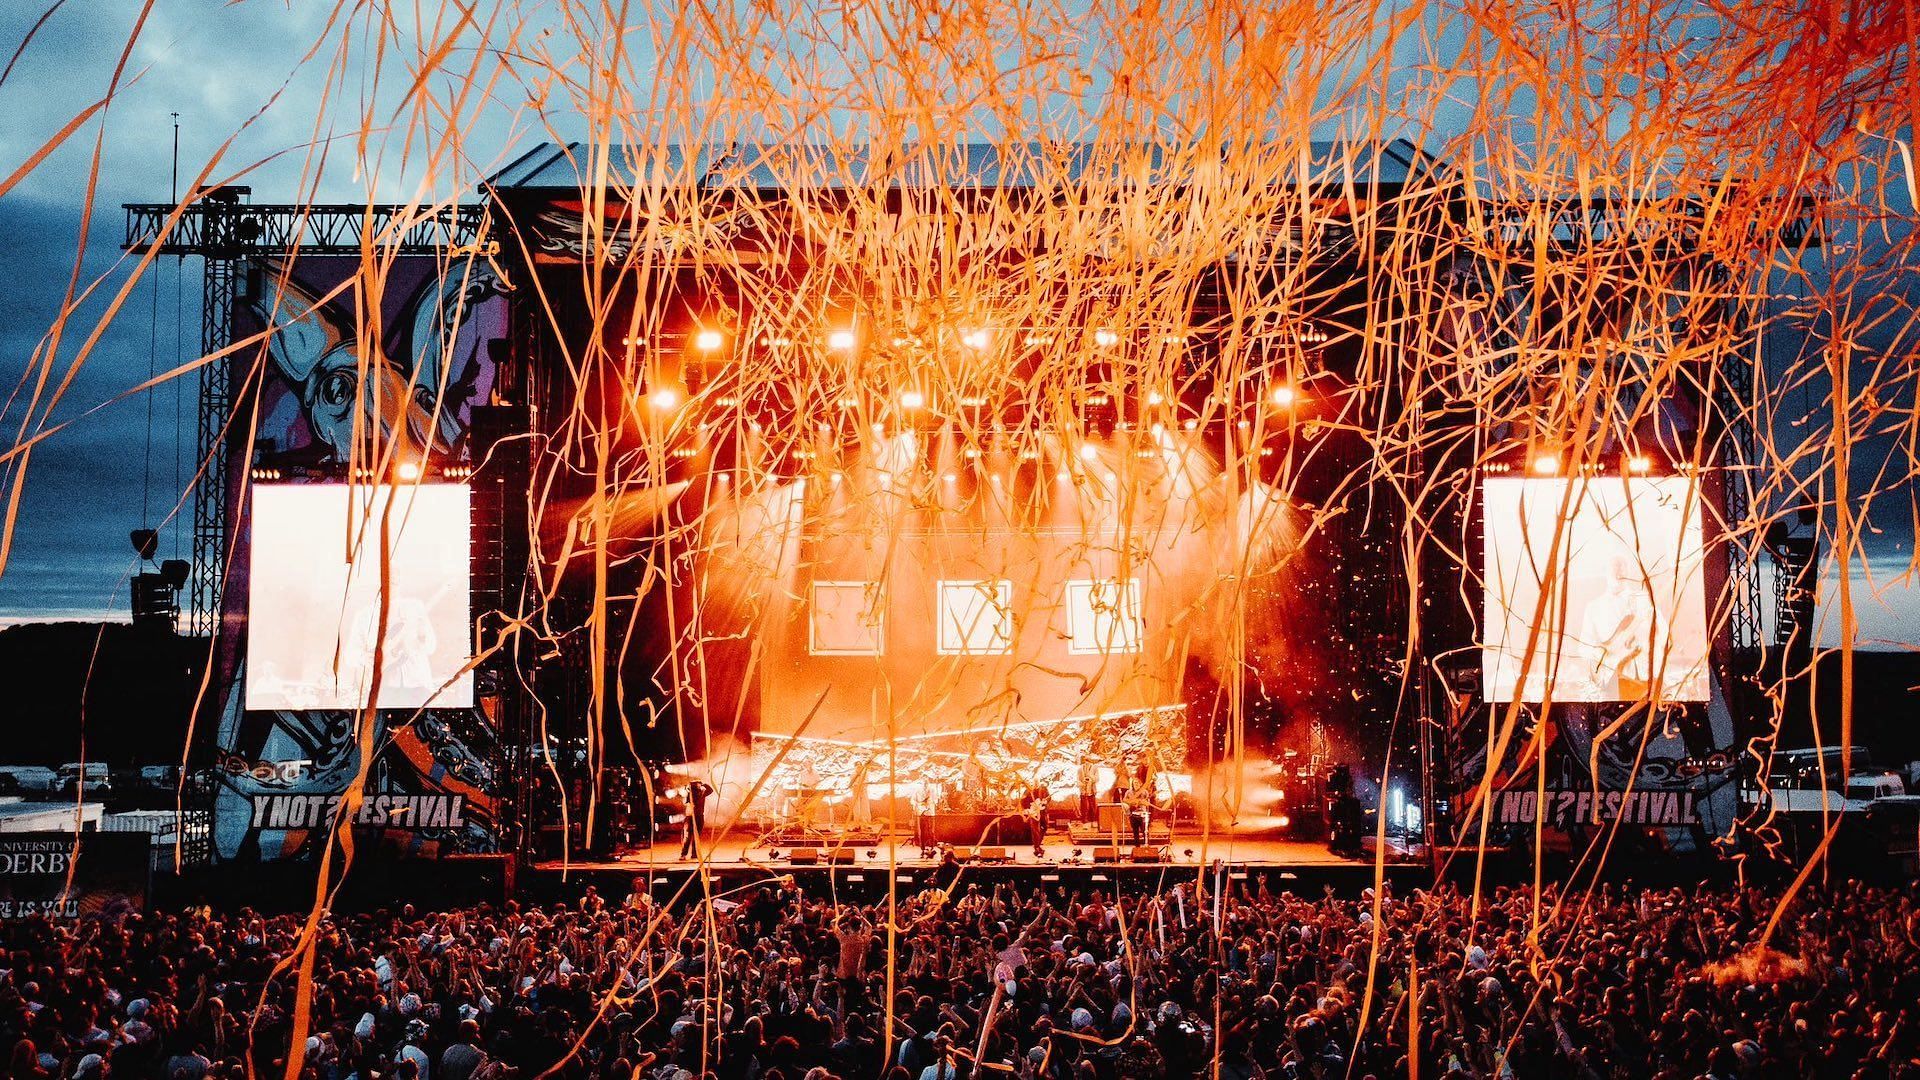 Y Not Festival venue (Image via X @ynotfestival)